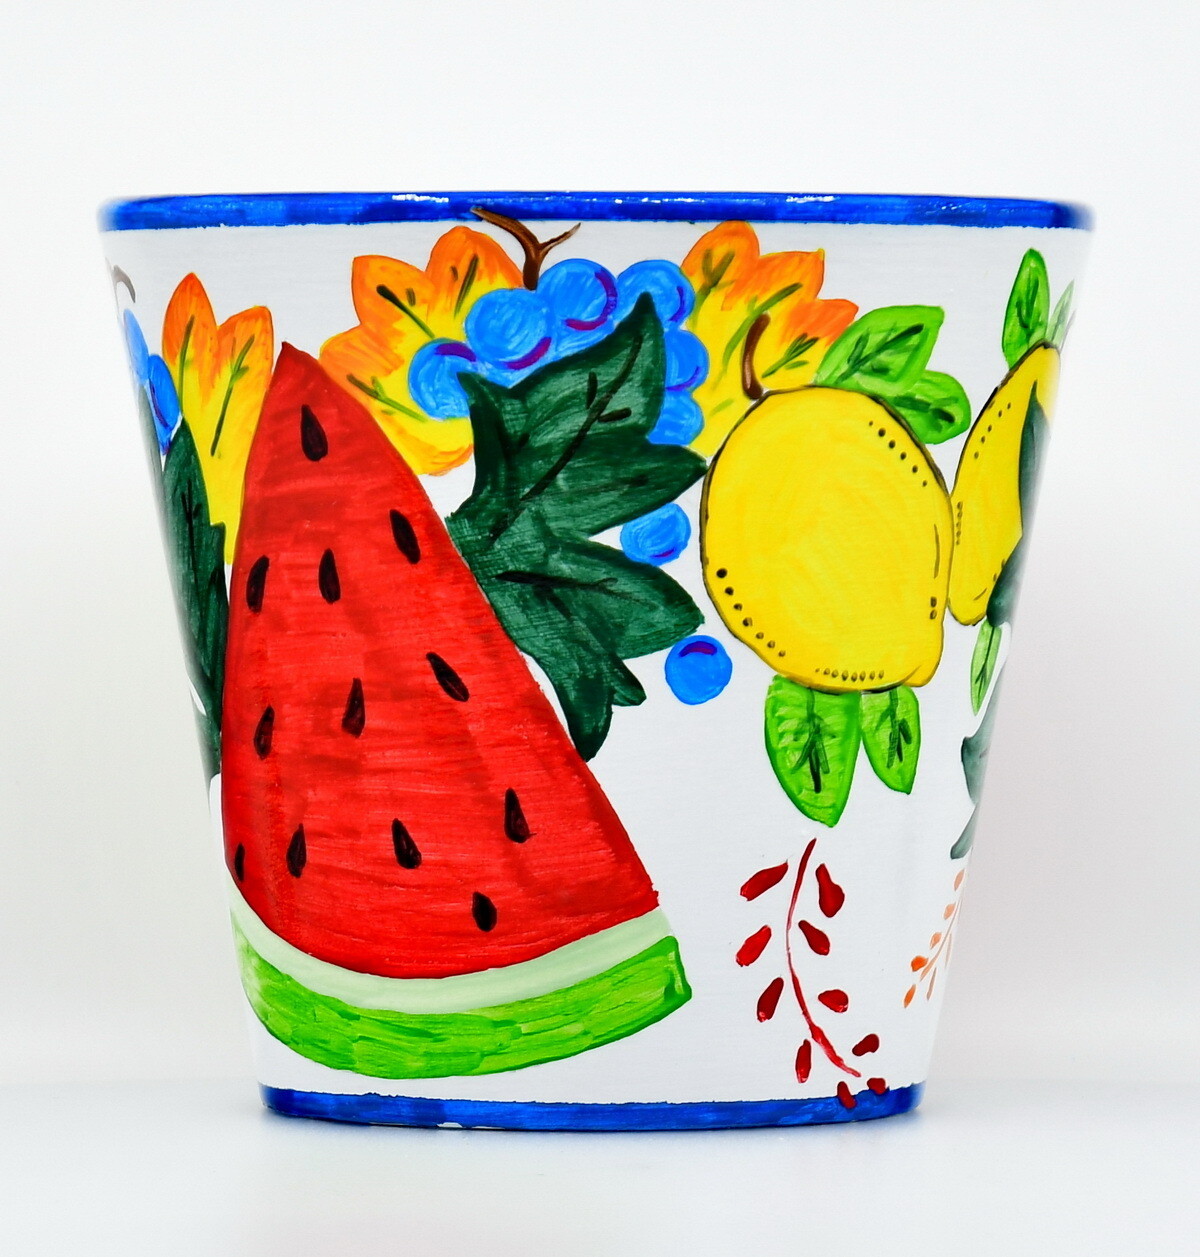 "Frutti misti" hand painted ceramic planter